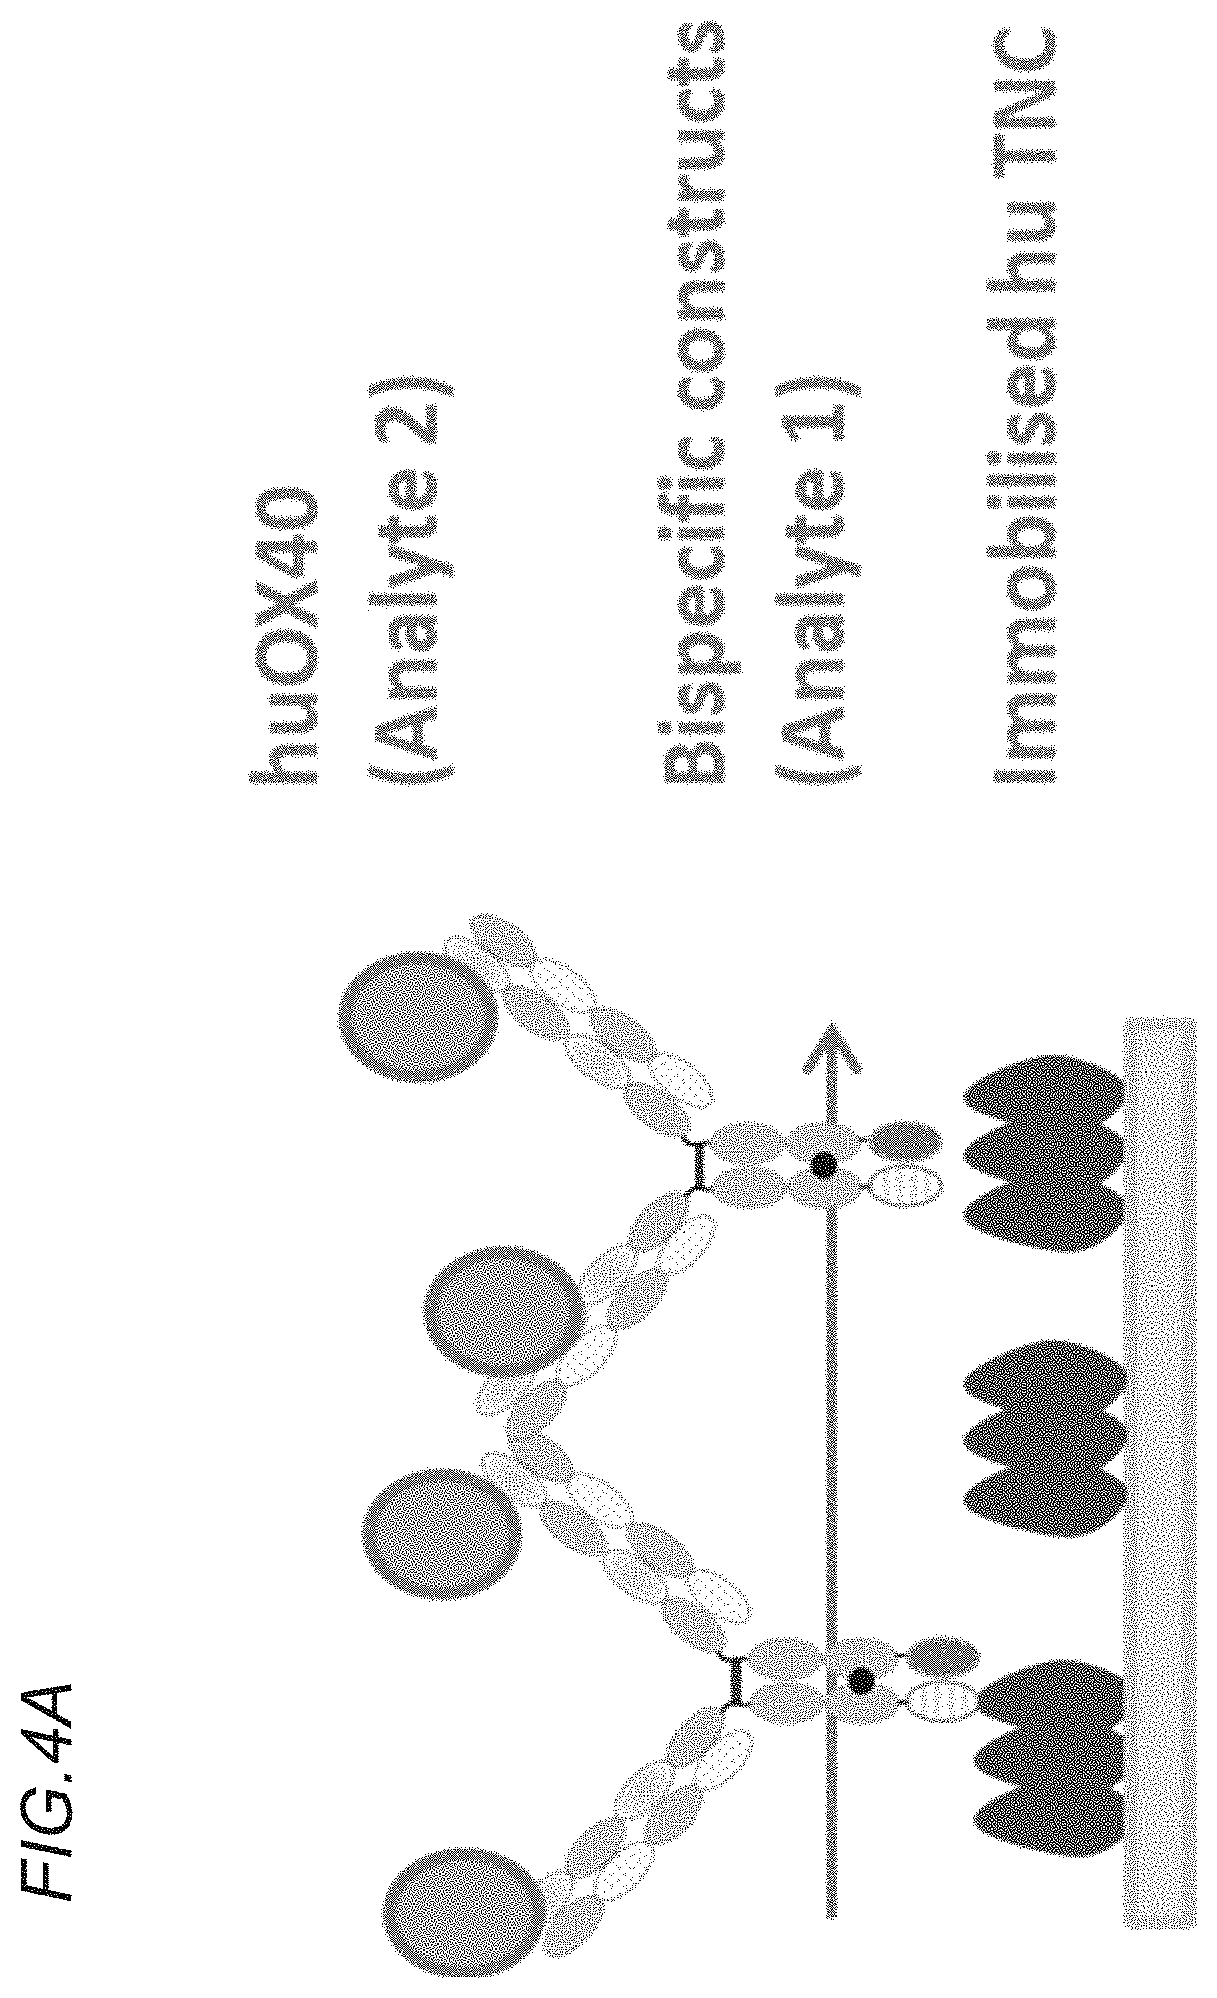 Bispecific antigen binding molecule for a costimulatory TNF receptor